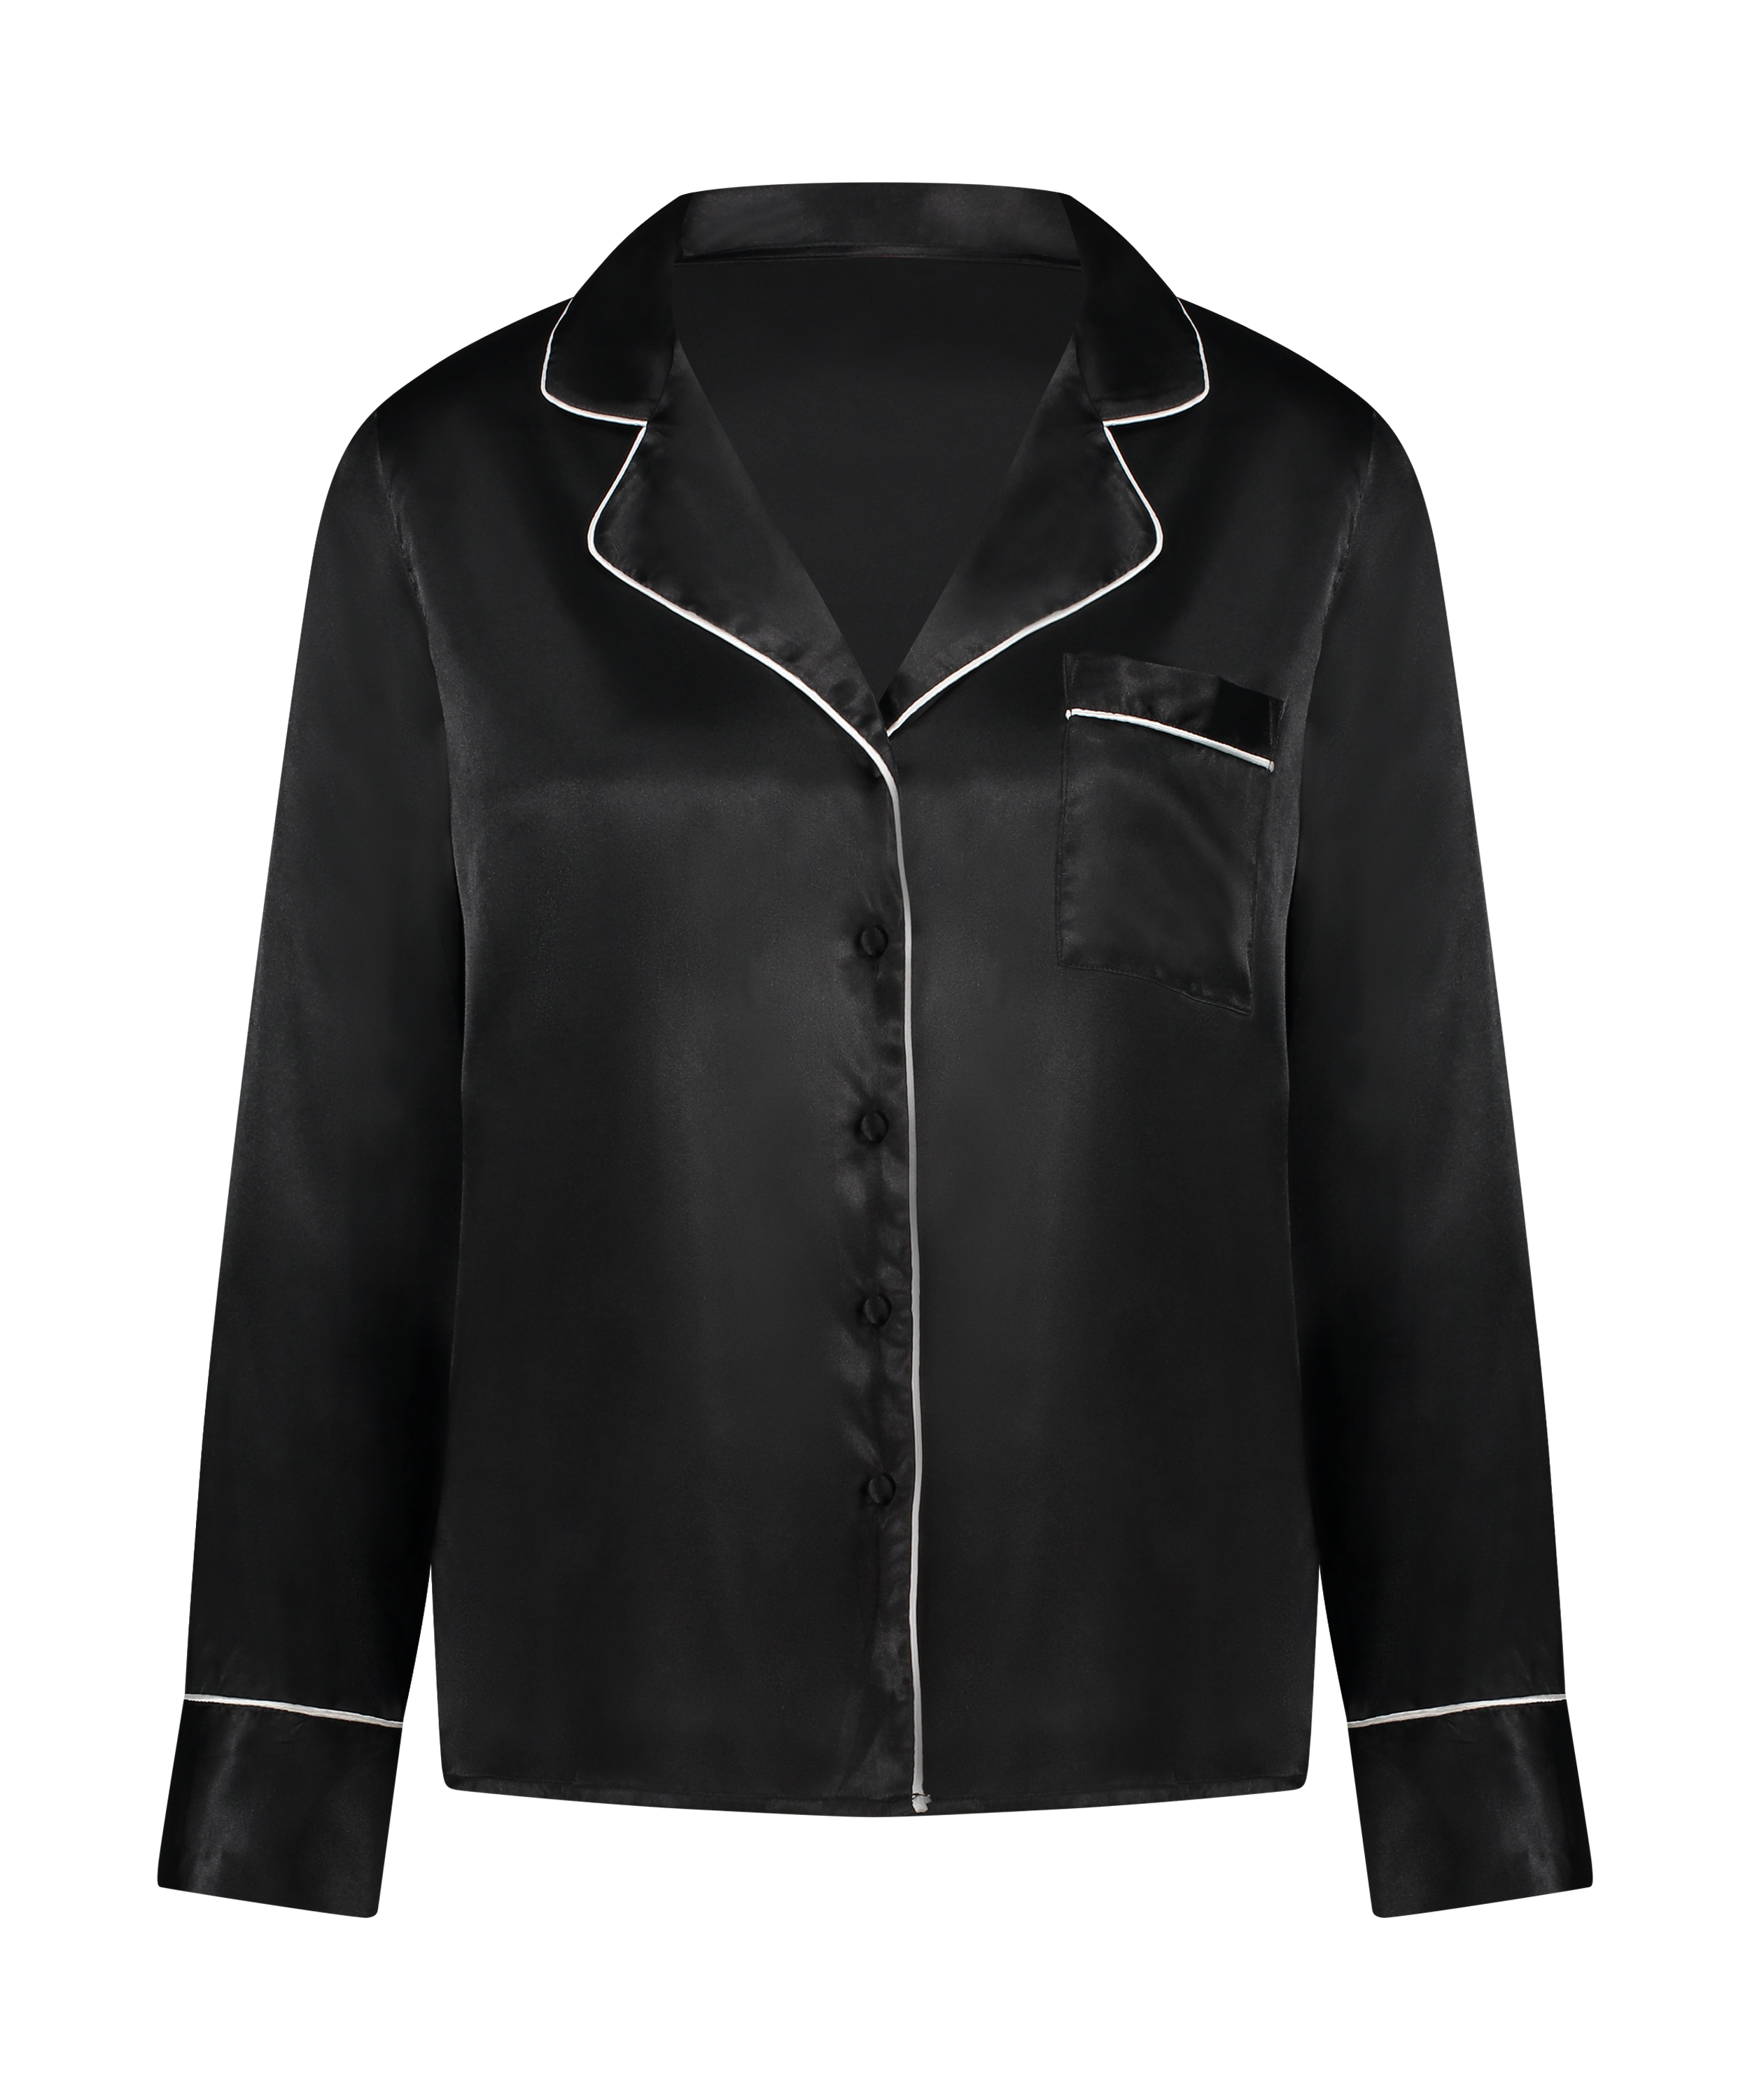 Satin Long-Sleeved Jacket, Black, main